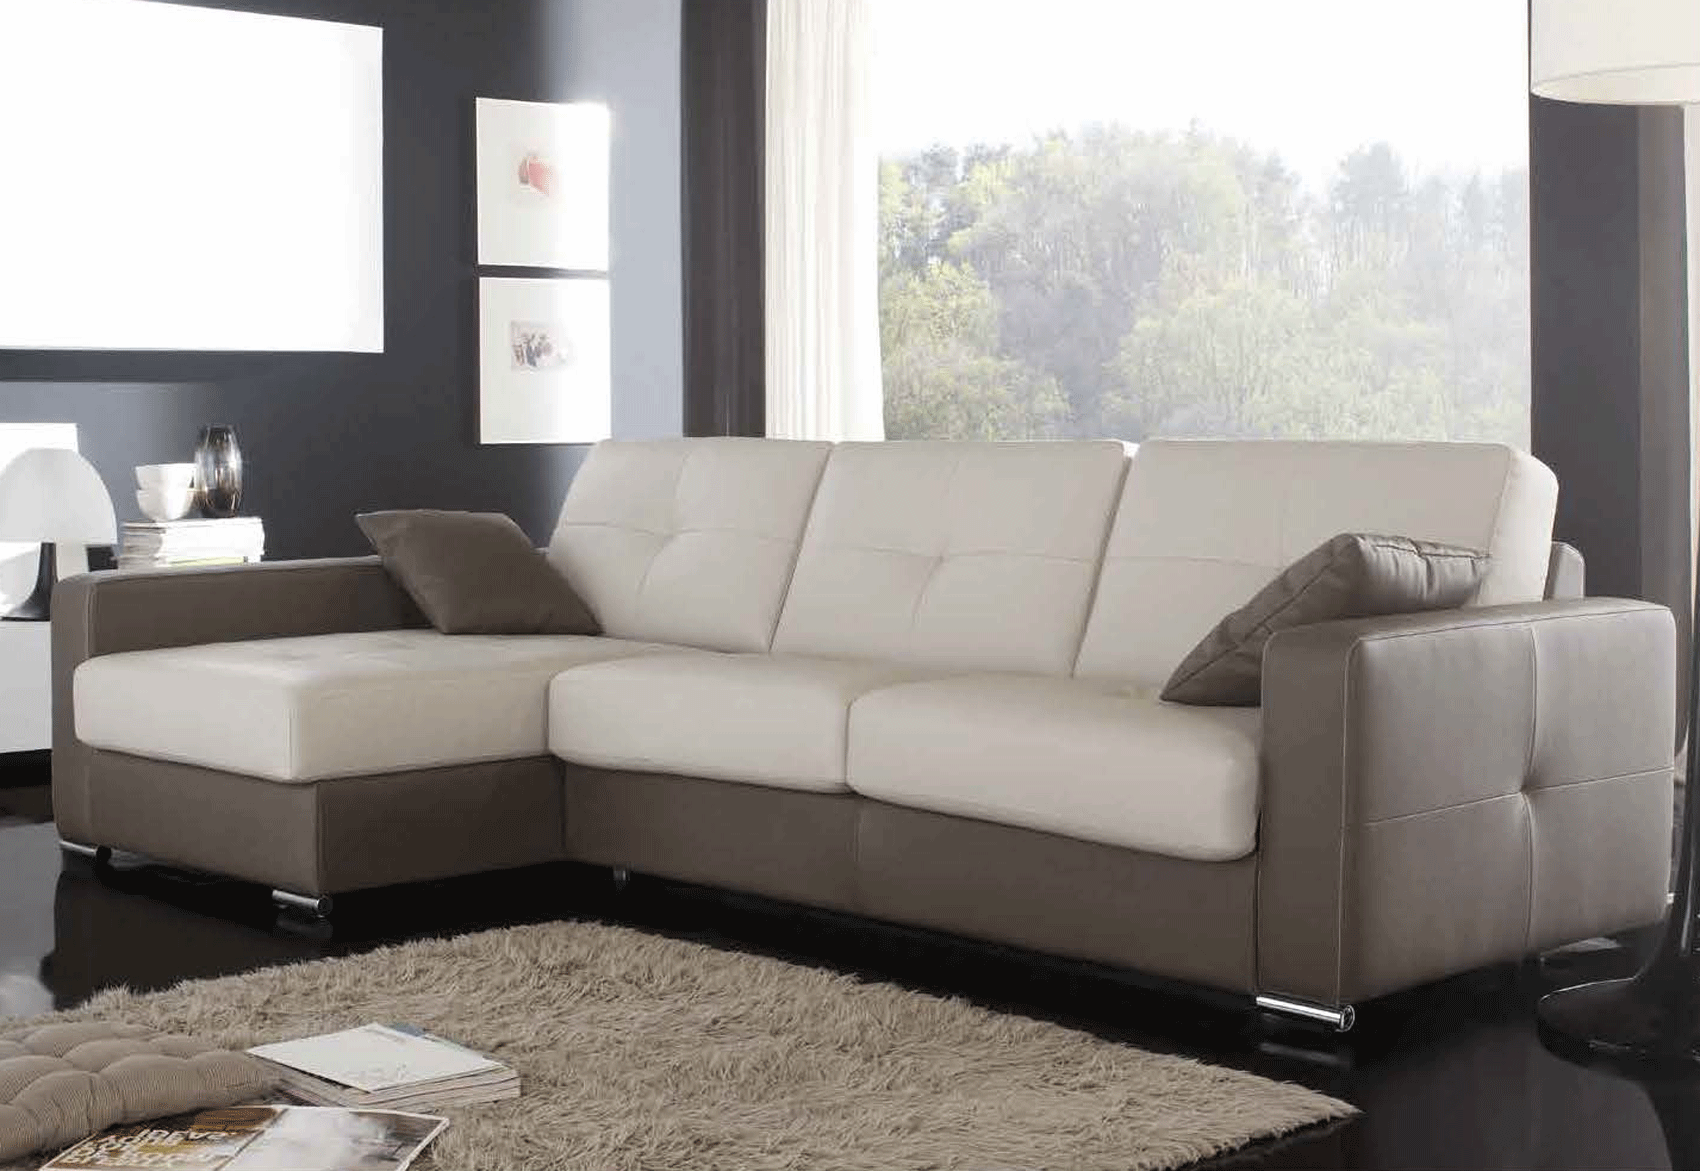 Living Room Furniture Reclining and Sliding Seats Sets Sleep Living